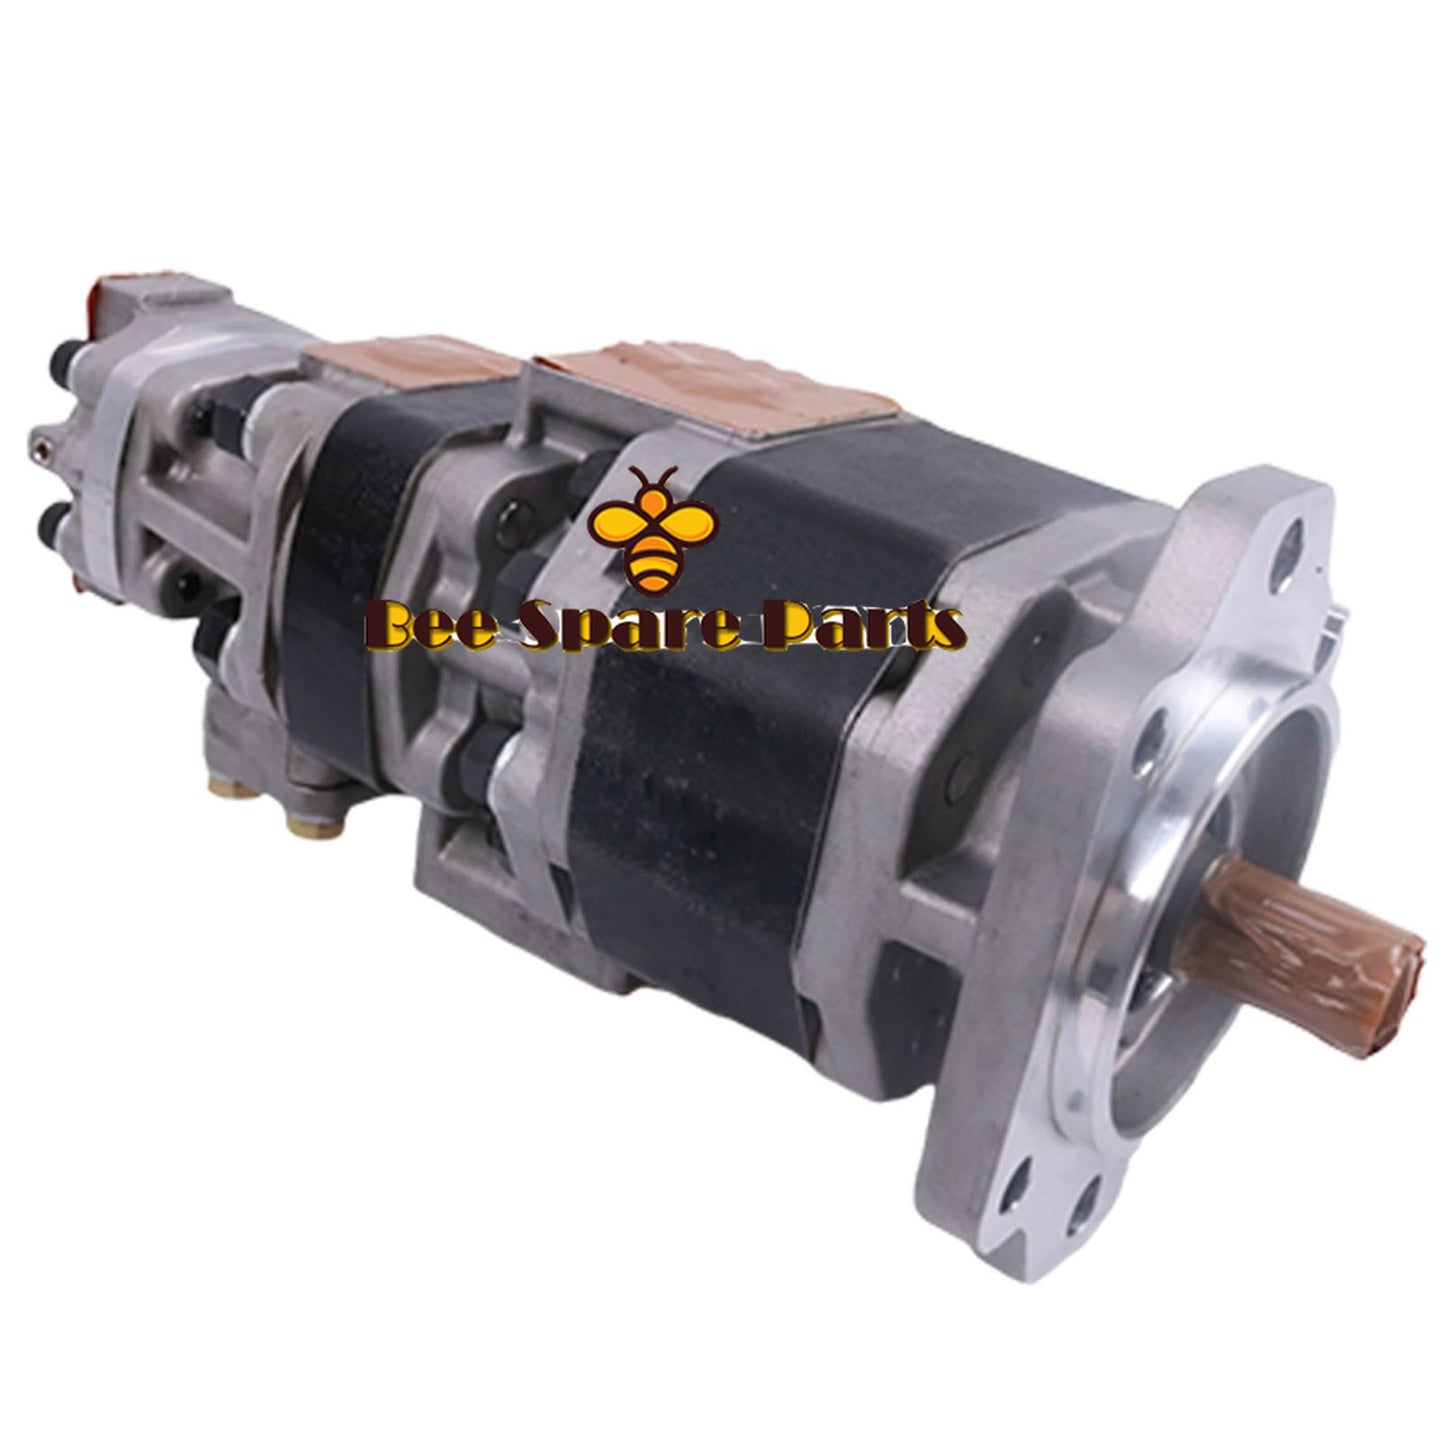 Hydraulic Pump Assy 705-95-05130 for Komatsu Dump Truck HM250-2 HM300-2